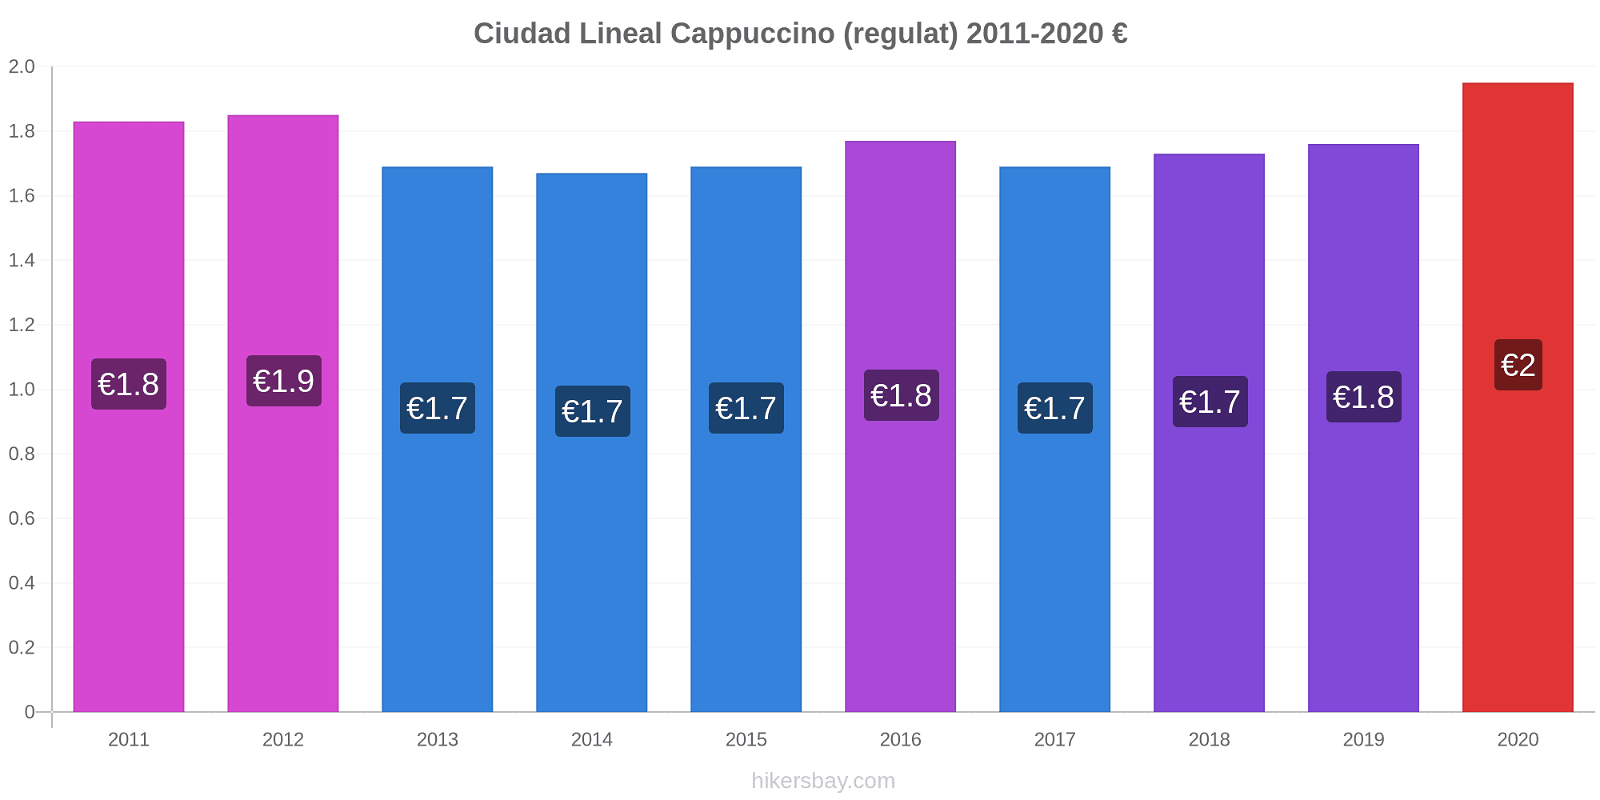 Ciudad Lineal modificări de preț Cappuccino (regulat) hikersbay.com